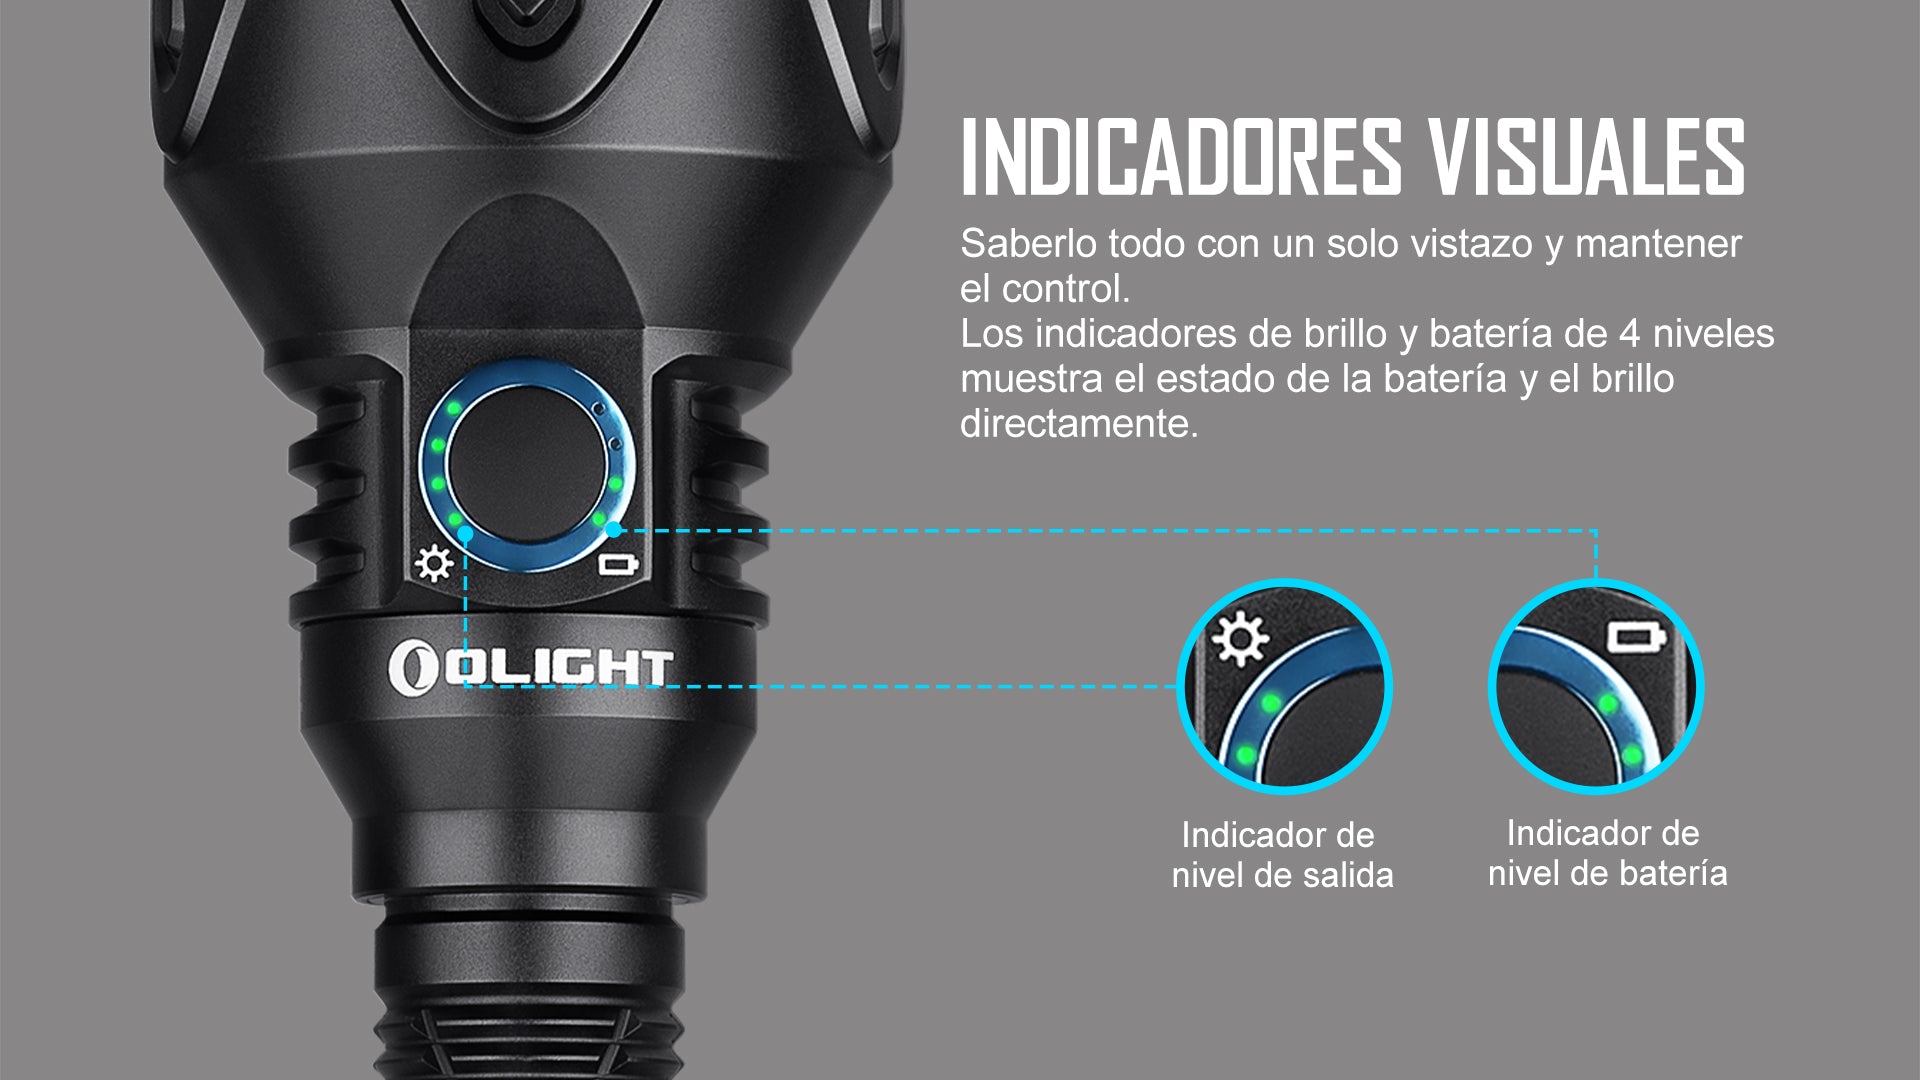 Olight Javelot Pro 2 Flashlight Hunting Kit